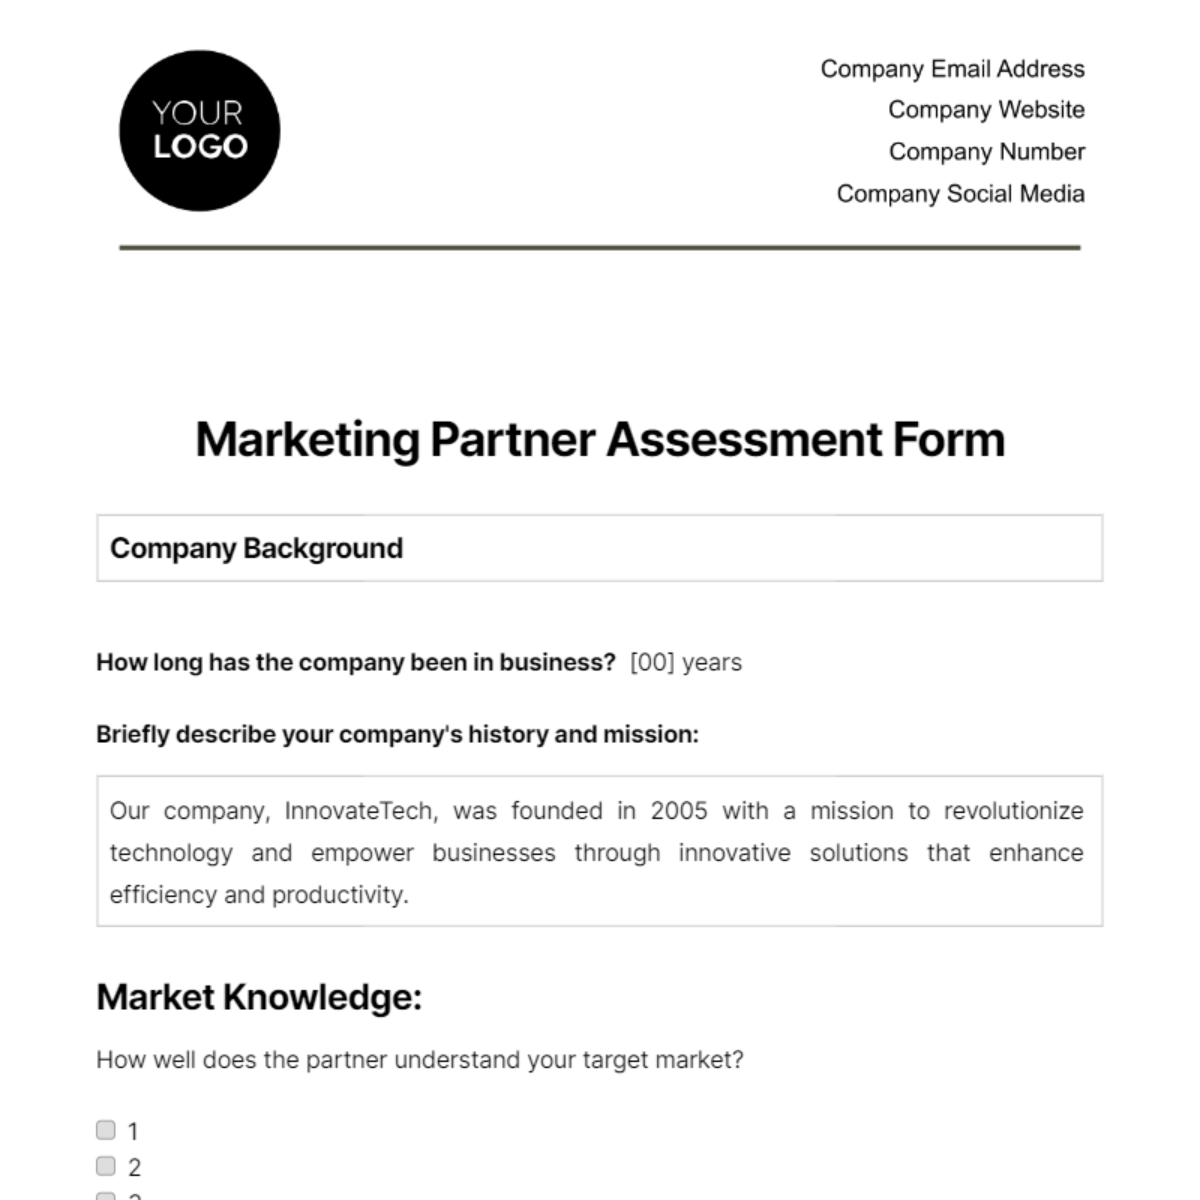 Marketing Partner Assessment Form Template